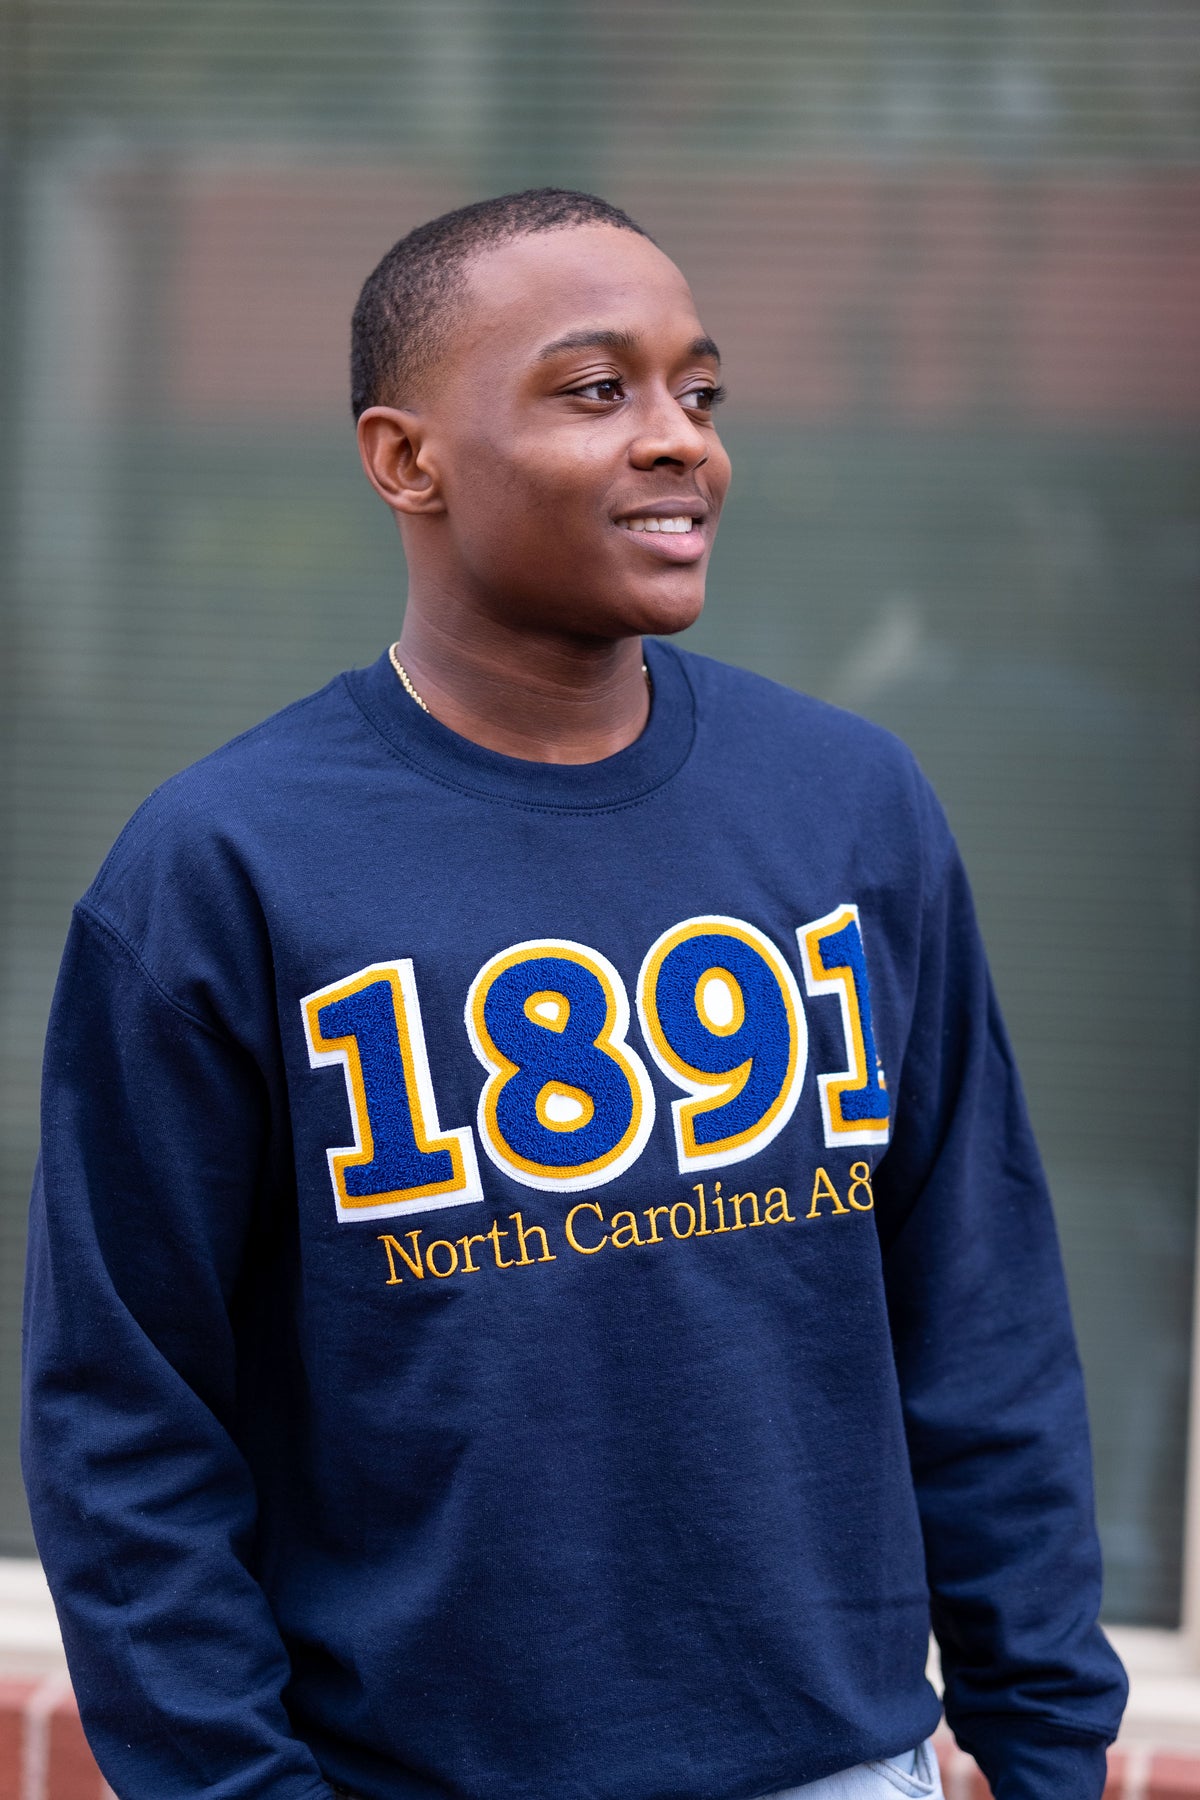 *Limited Edition* 1891 North Carolina A&T Navy Sweatshirt (Unisex)